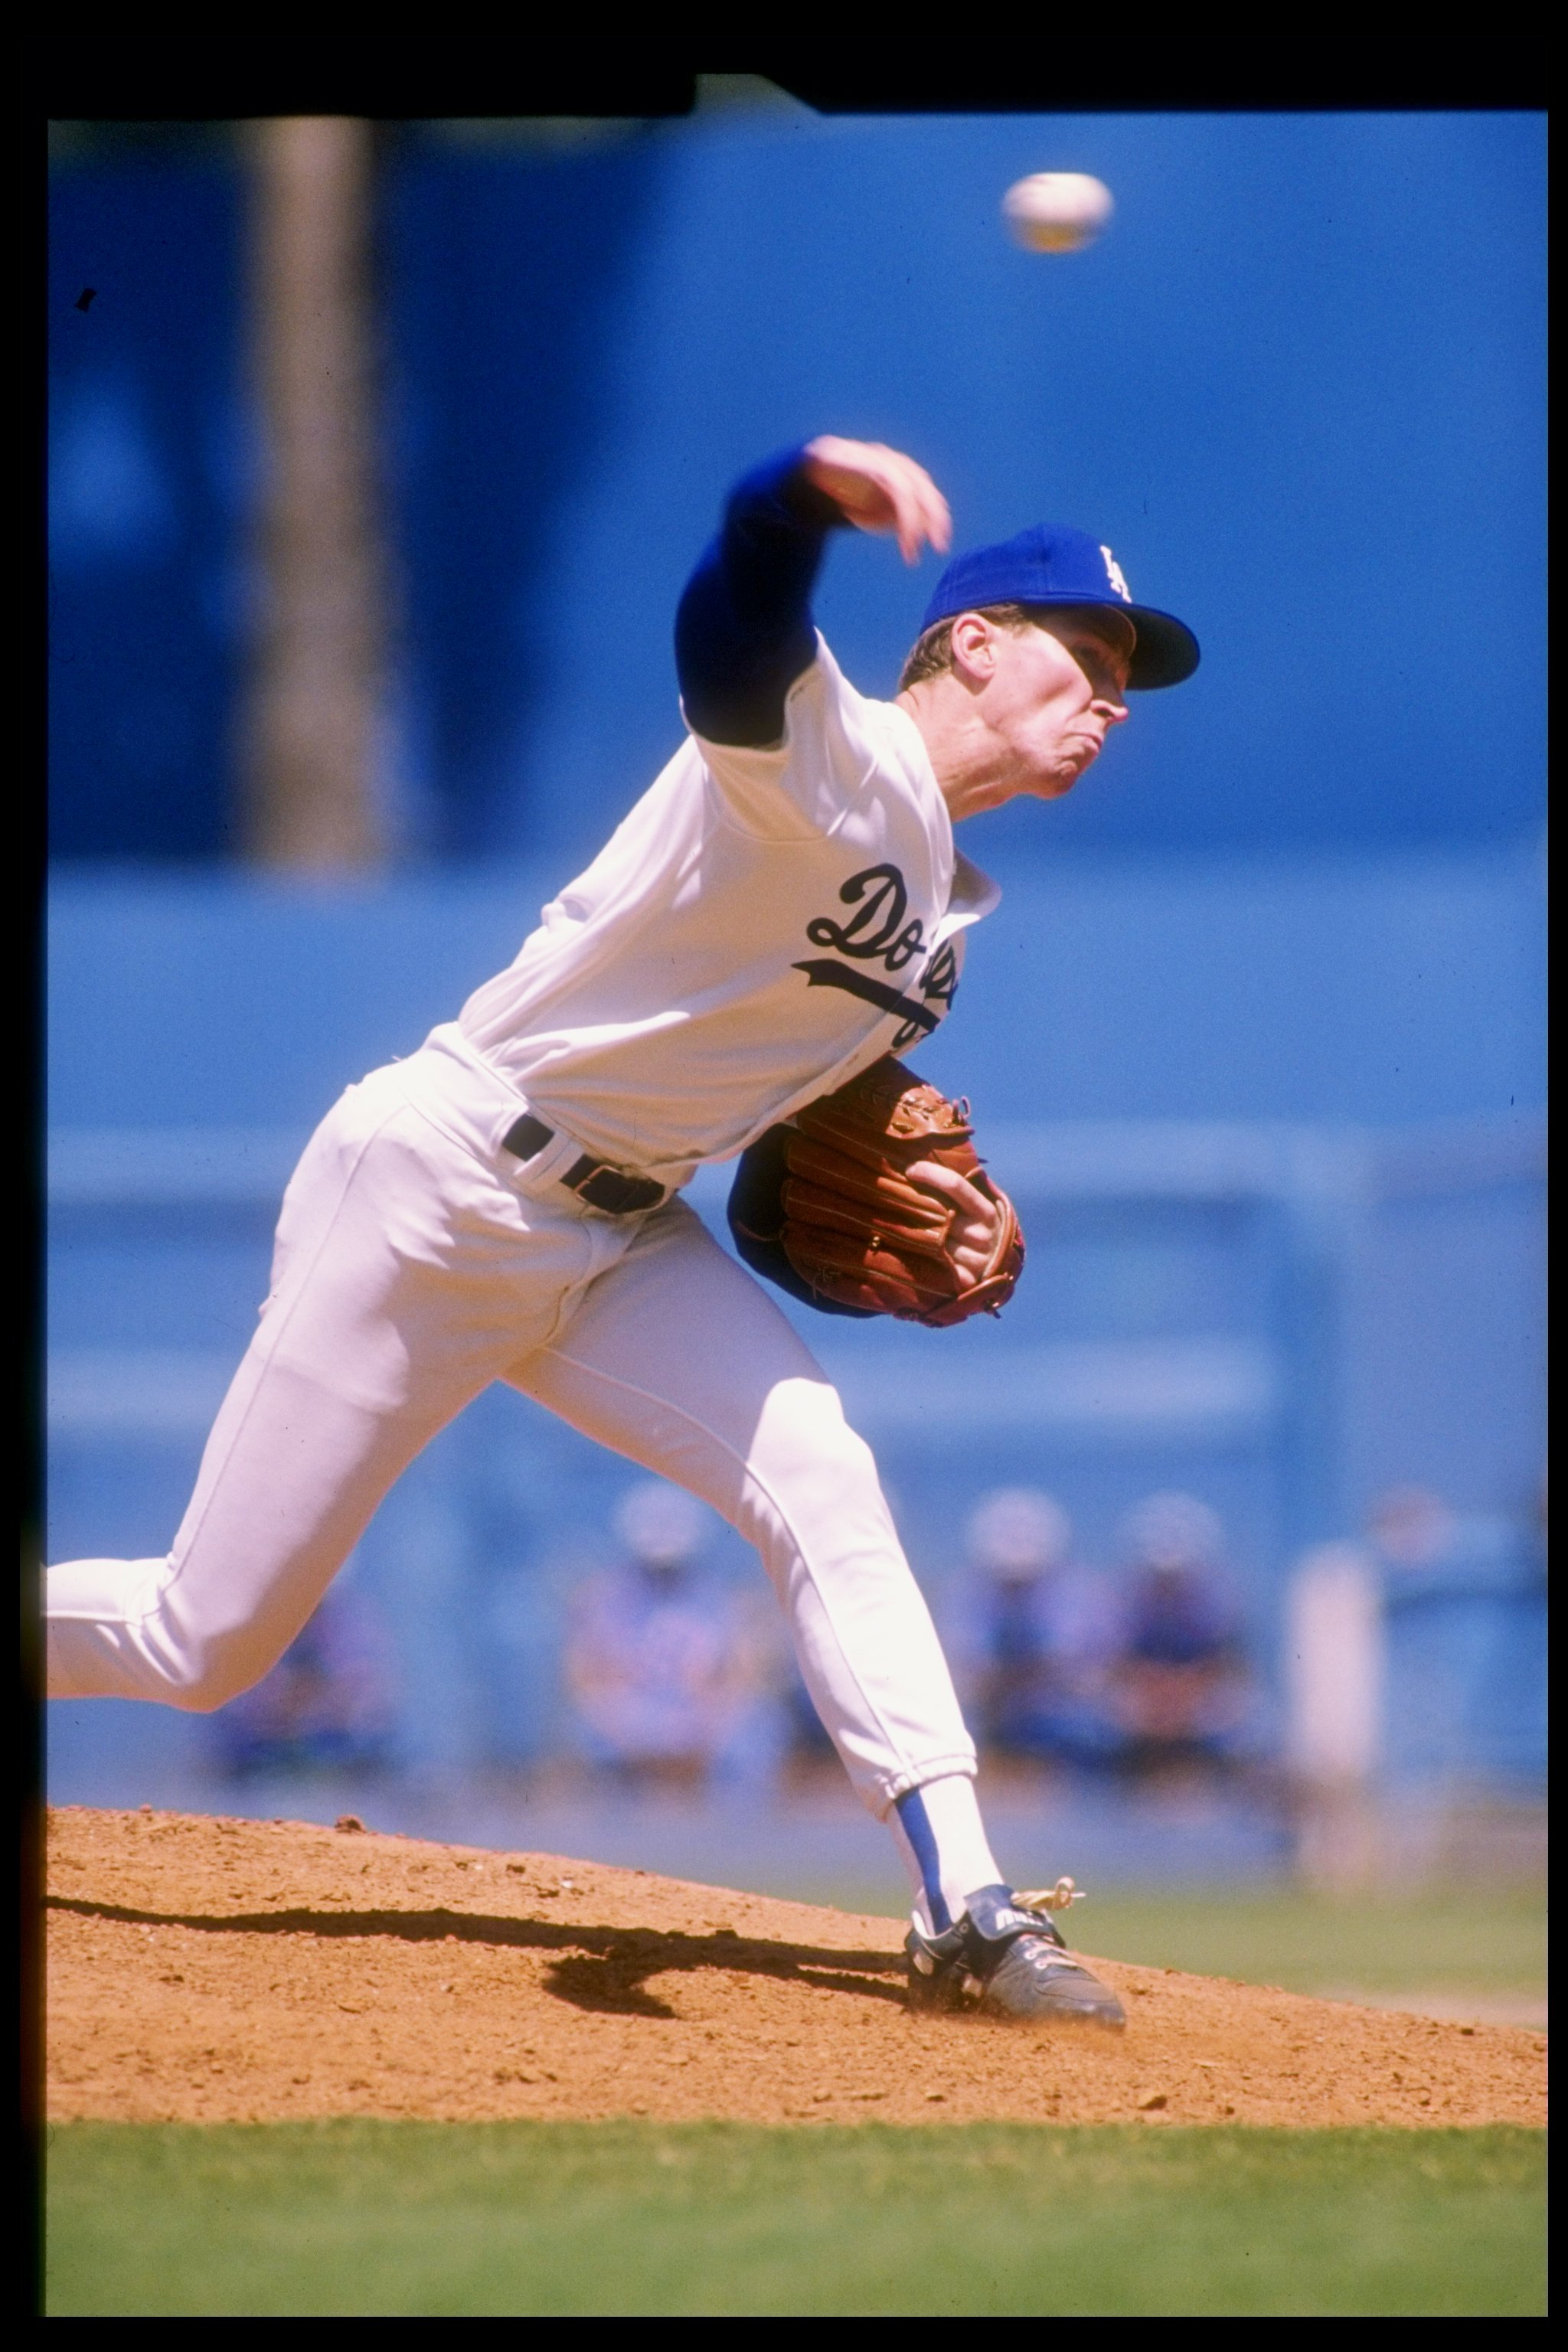 1988 Dodgers player profile: Orel Hershiser, the bulldog - True Blue LA